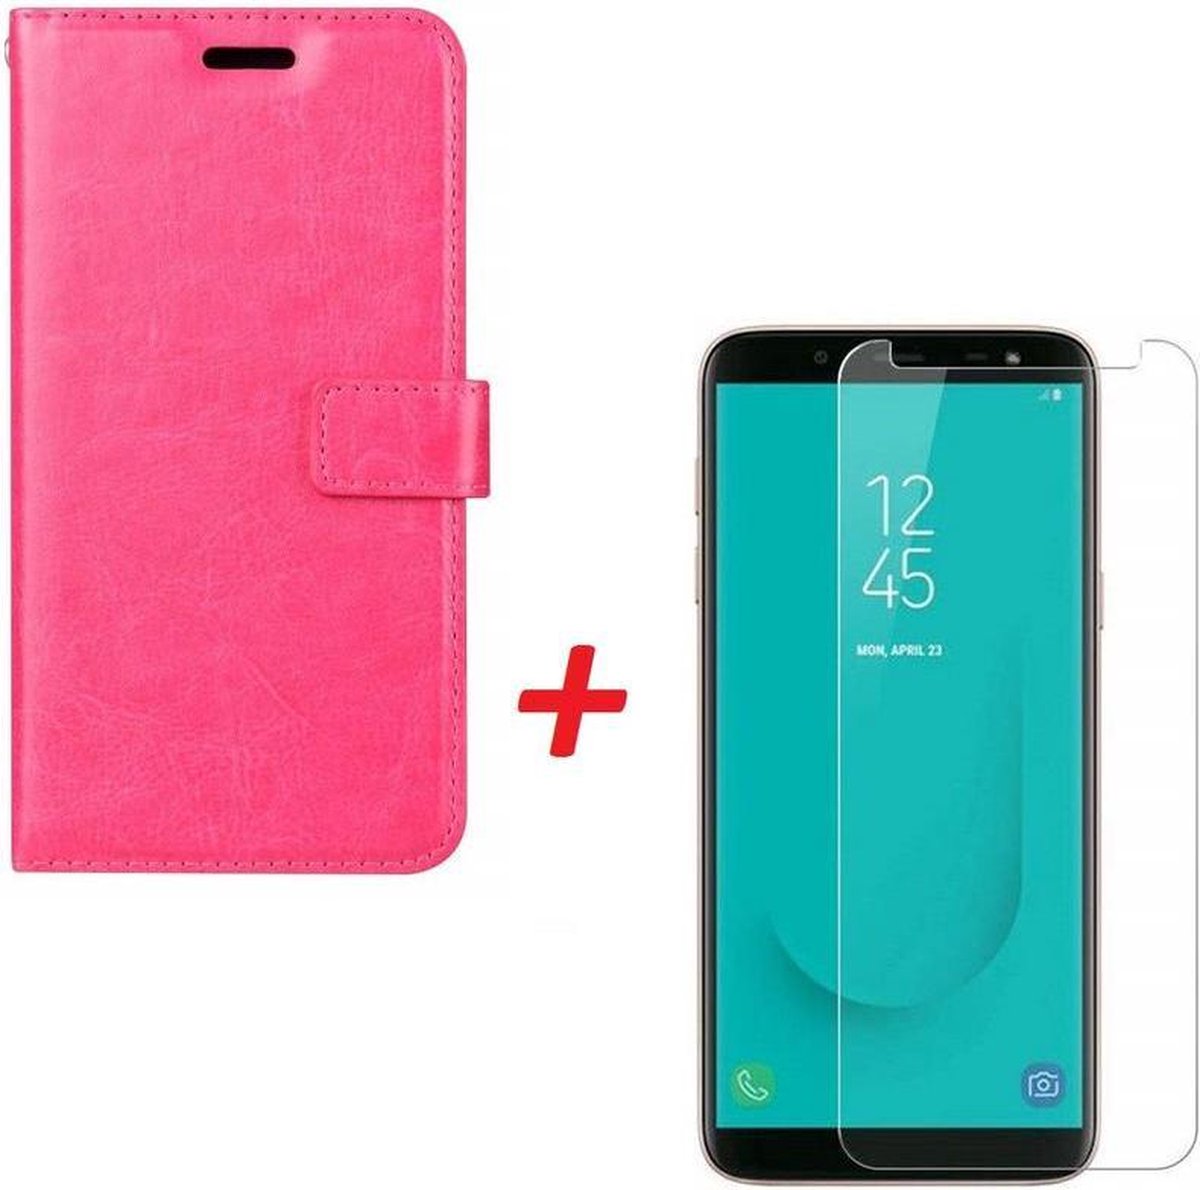 Samsung Galaxy J8 2018 Portemonnee hoesje roze met Tempered Glas Screen protector